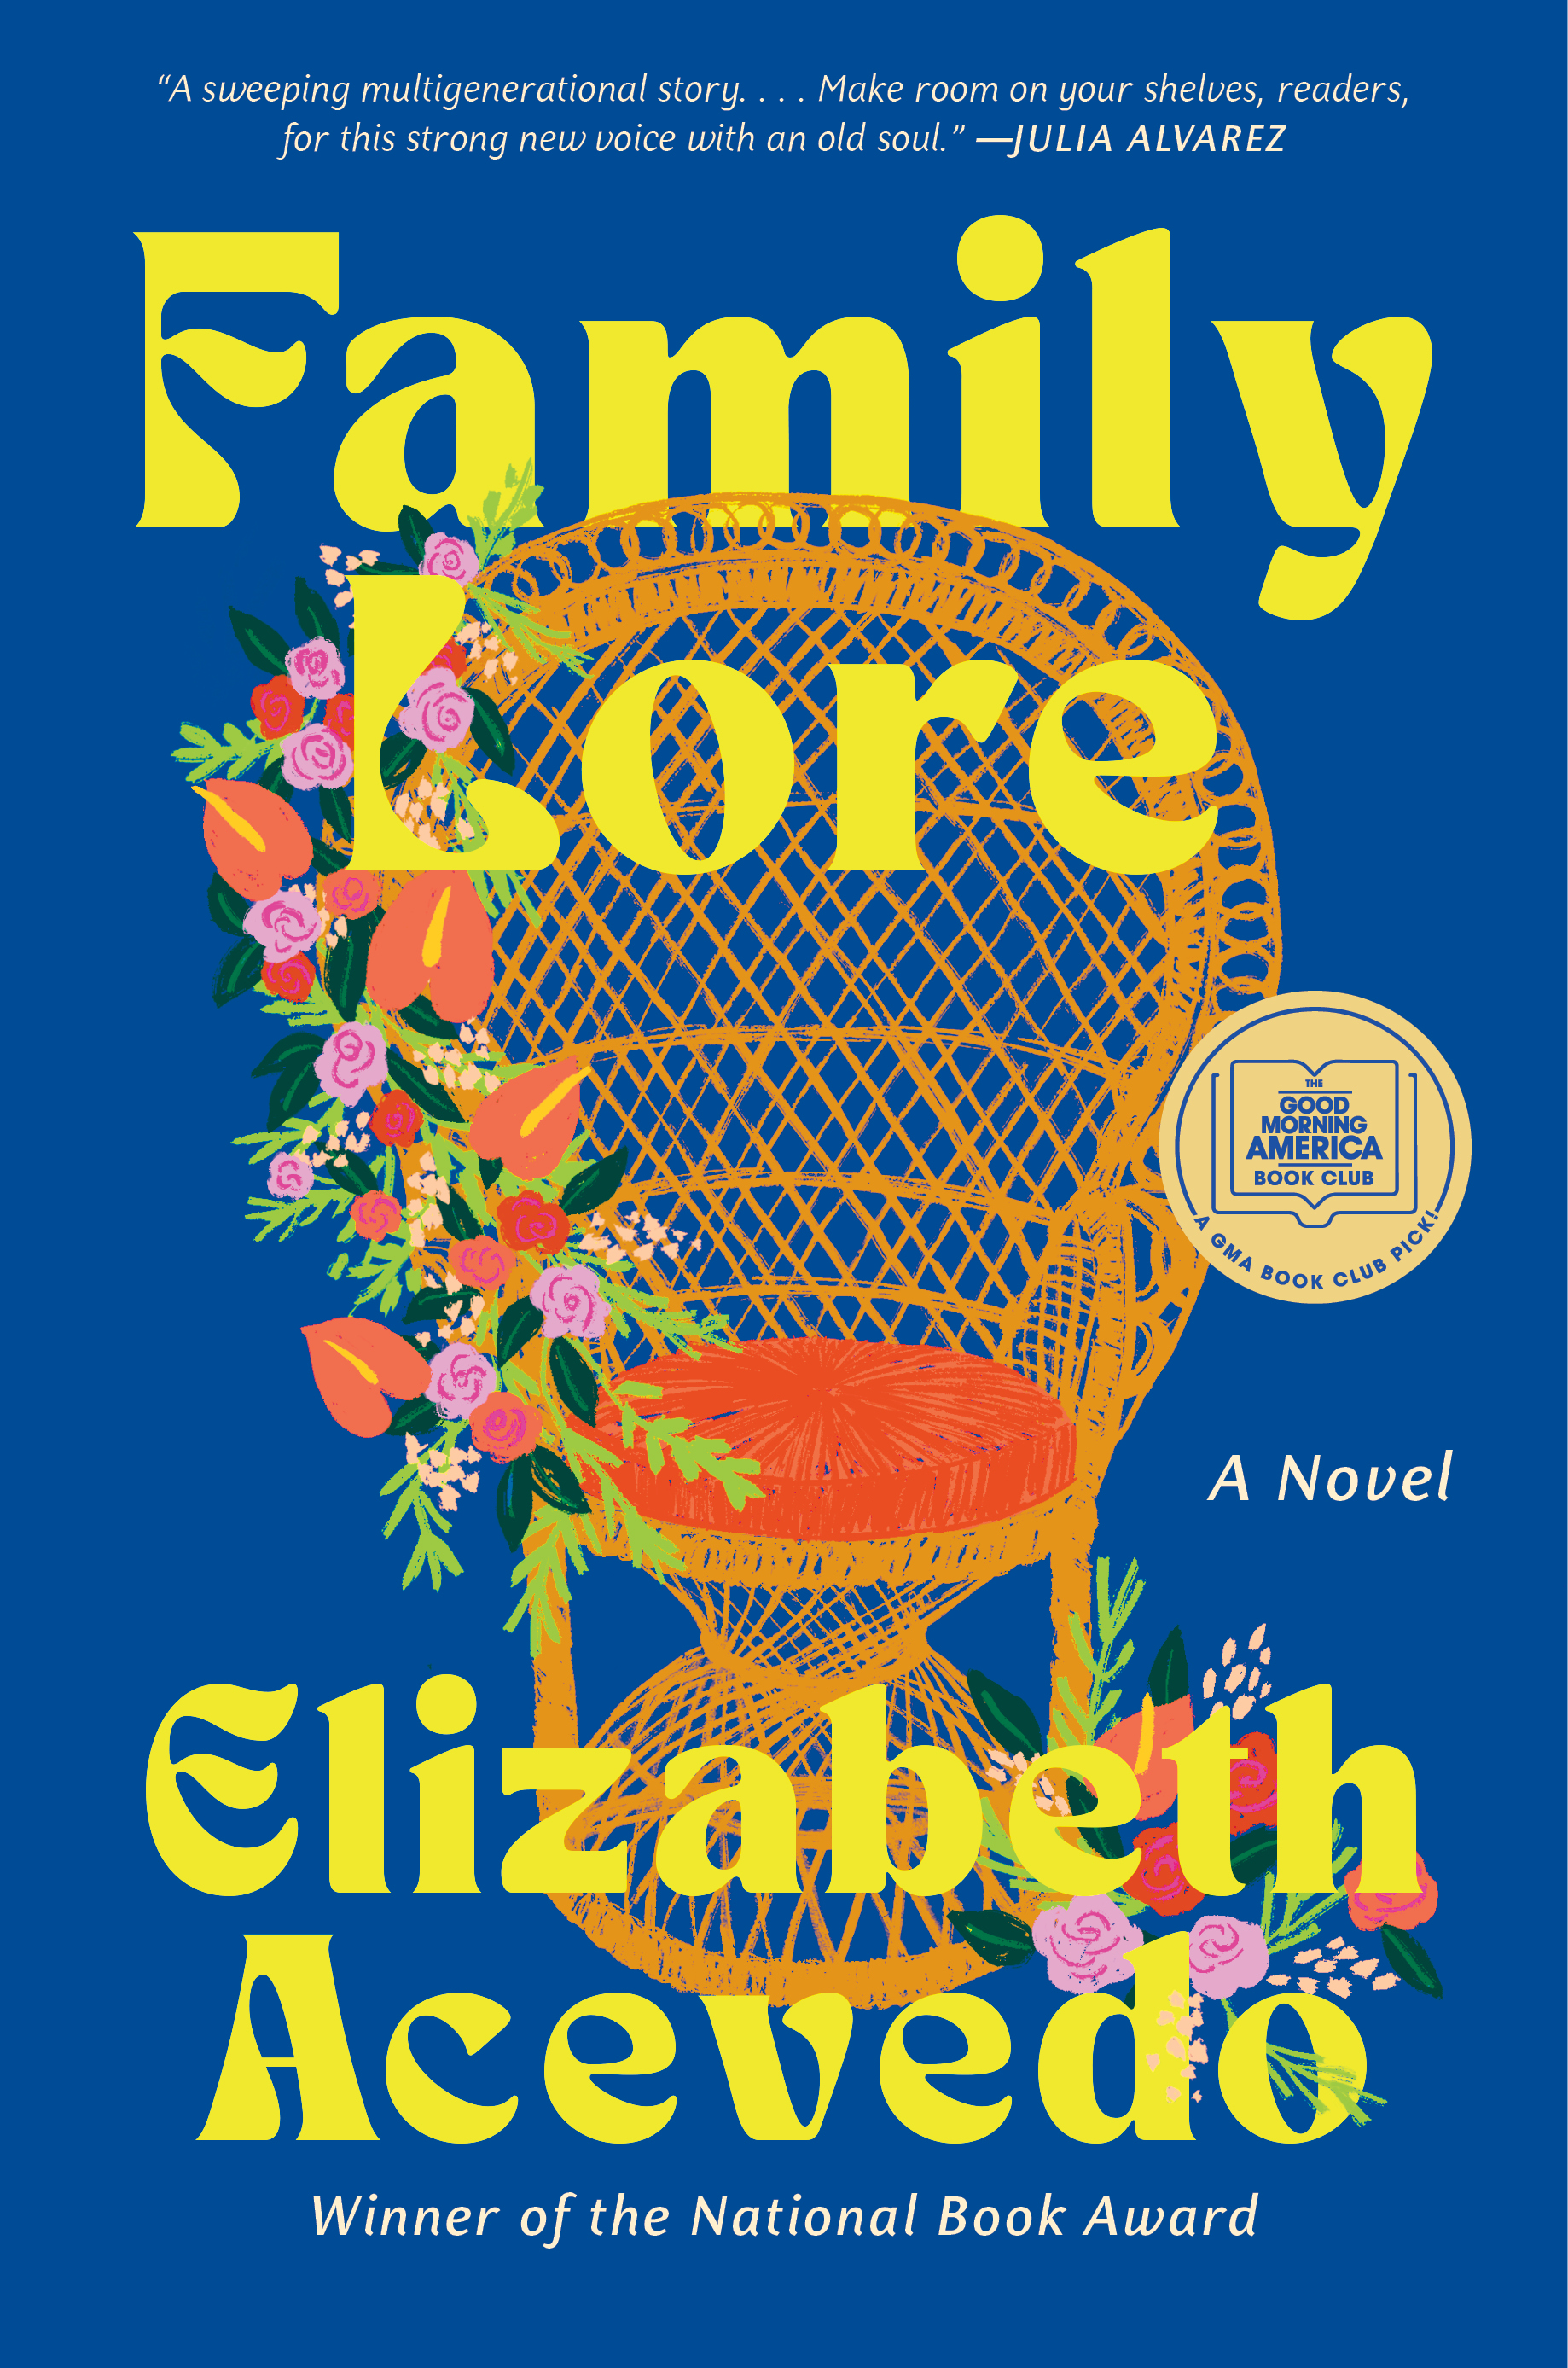 Family Lore by Elizabeth Acevedo PDF Download